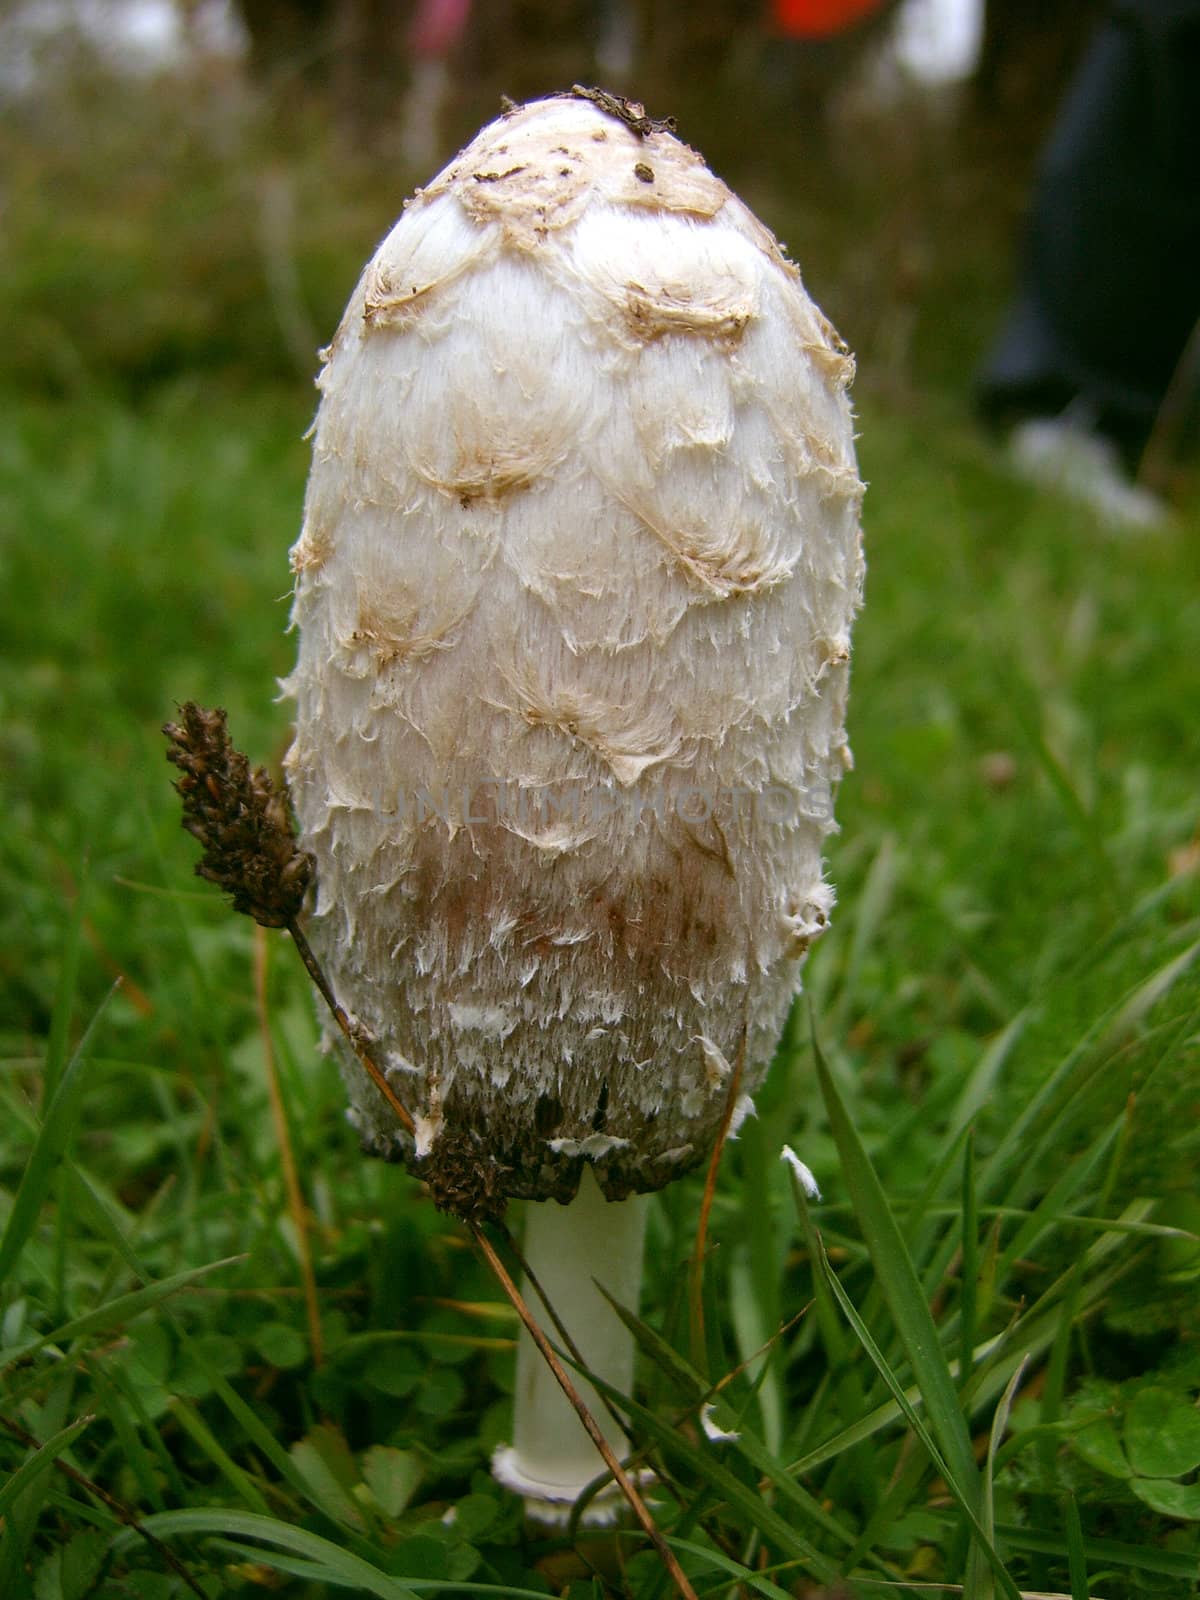 Shaggy mushroom by lukaves